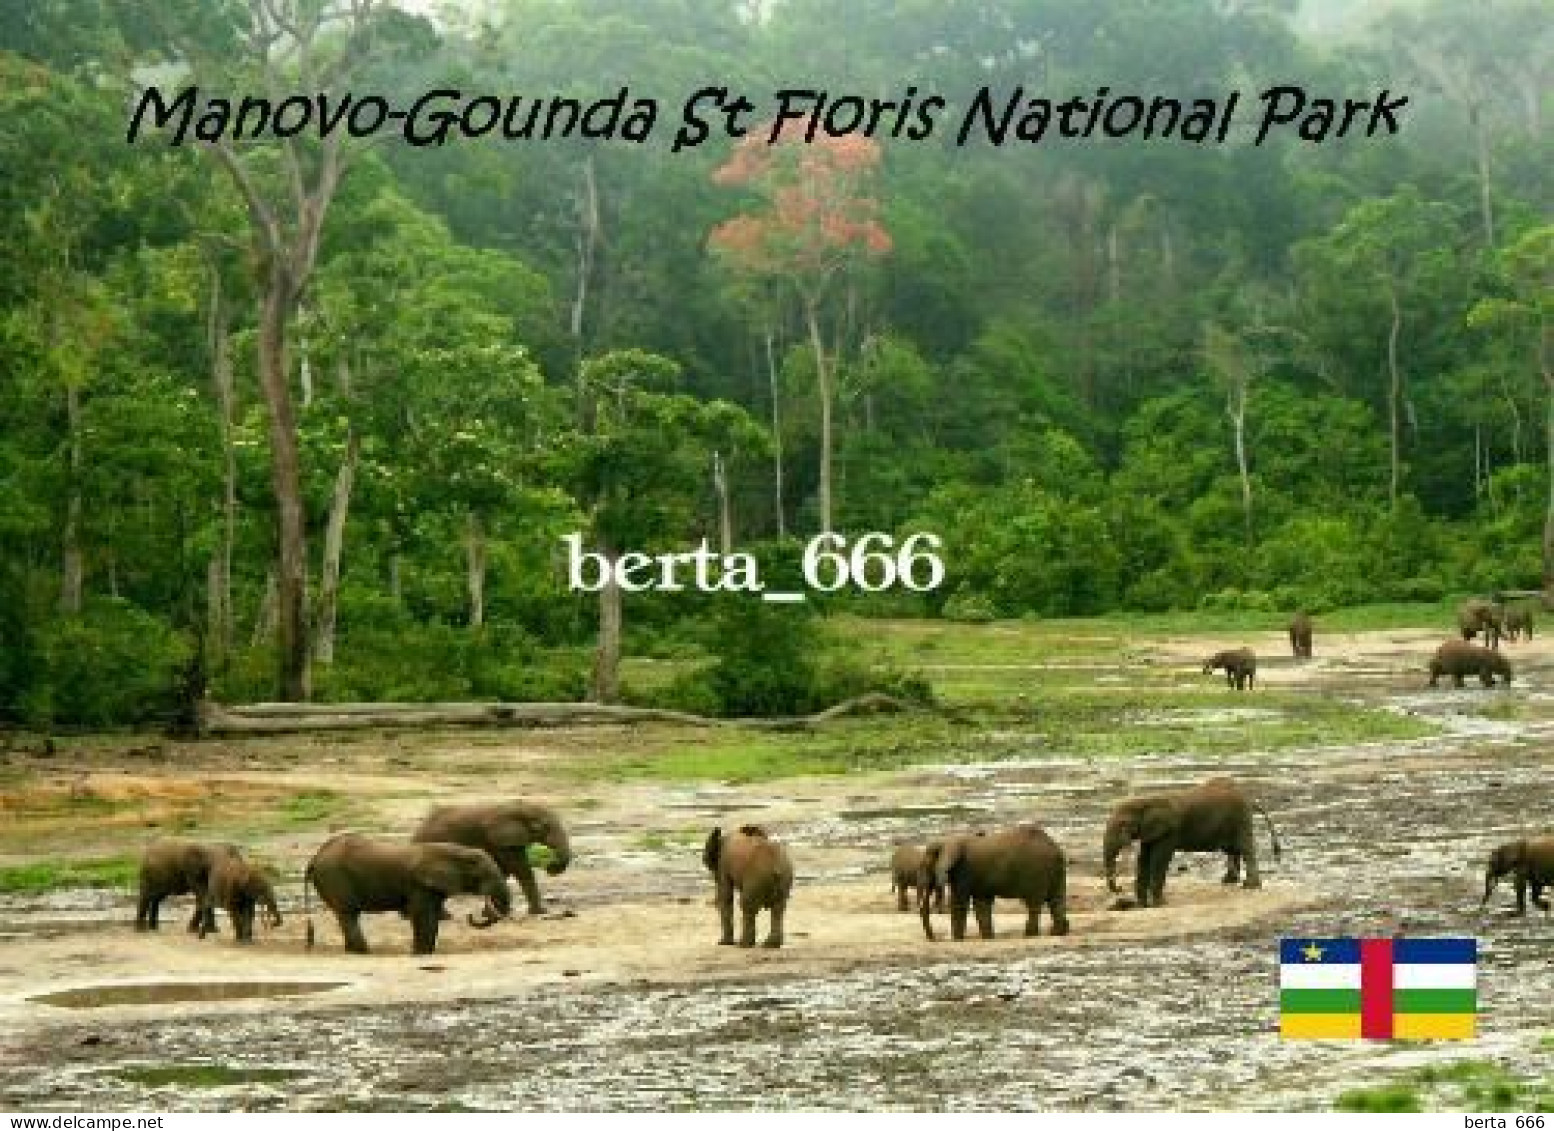 Central African Manovo-Gounda St. Floris National Park UNESCO New Postcard - Central African Republic